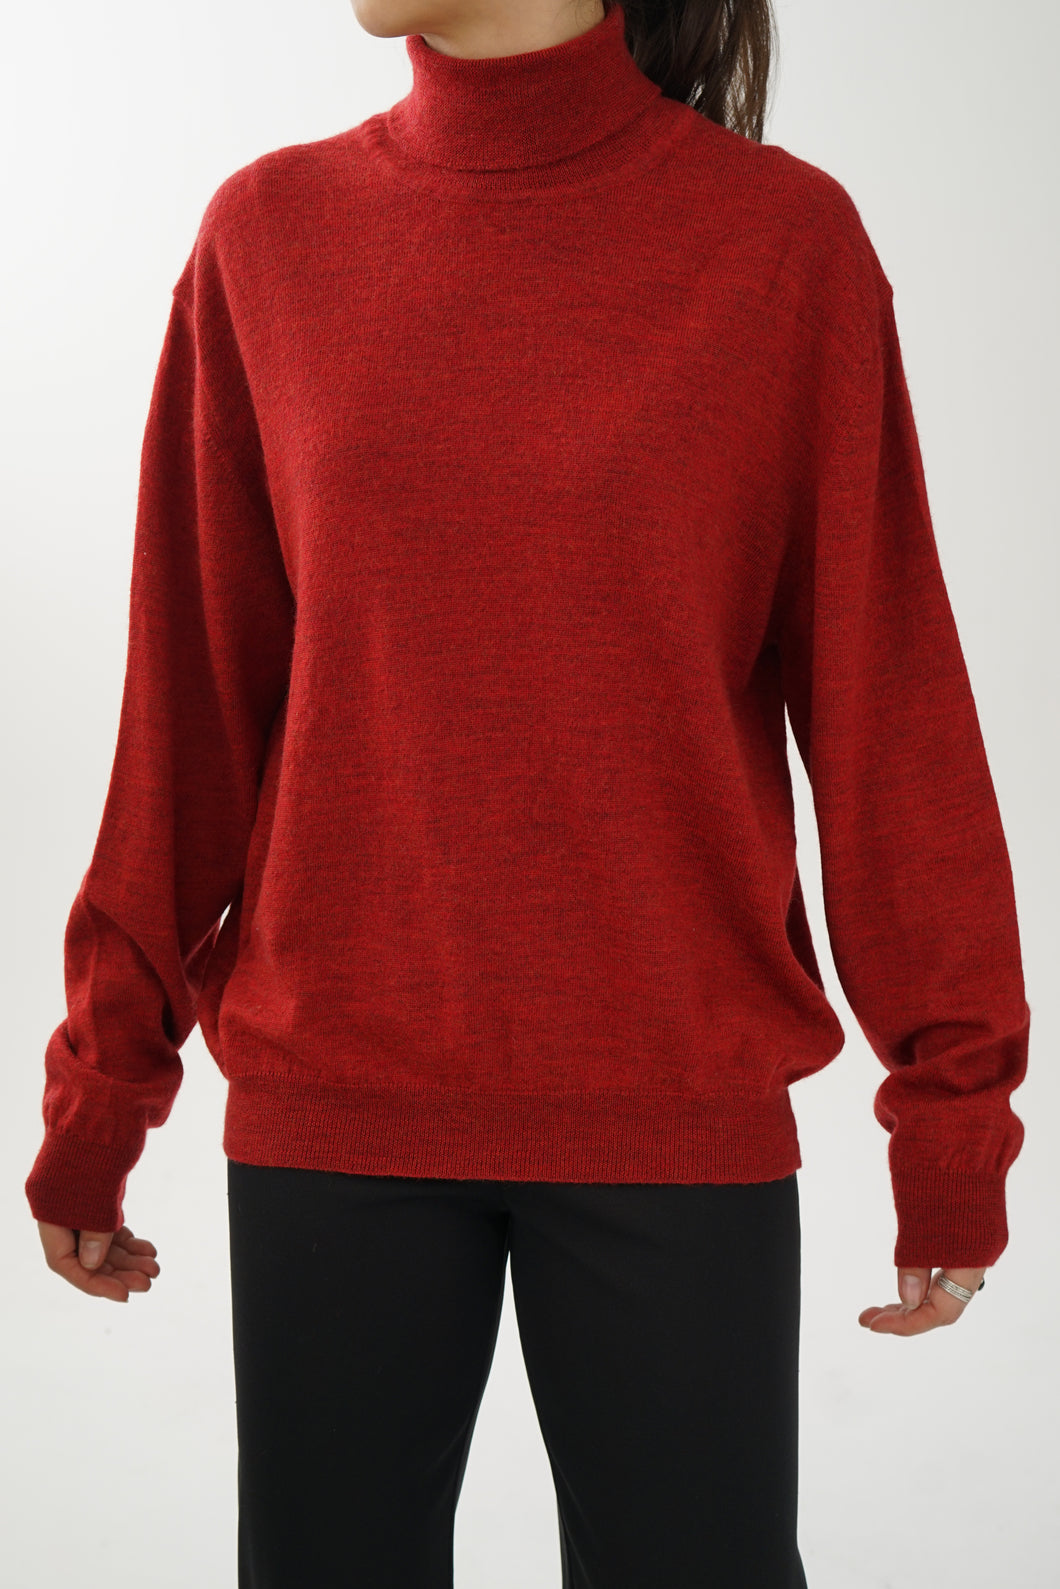 Red wine turtleneck sweater in pure virgin wool Mino Lombardi for men L-XL